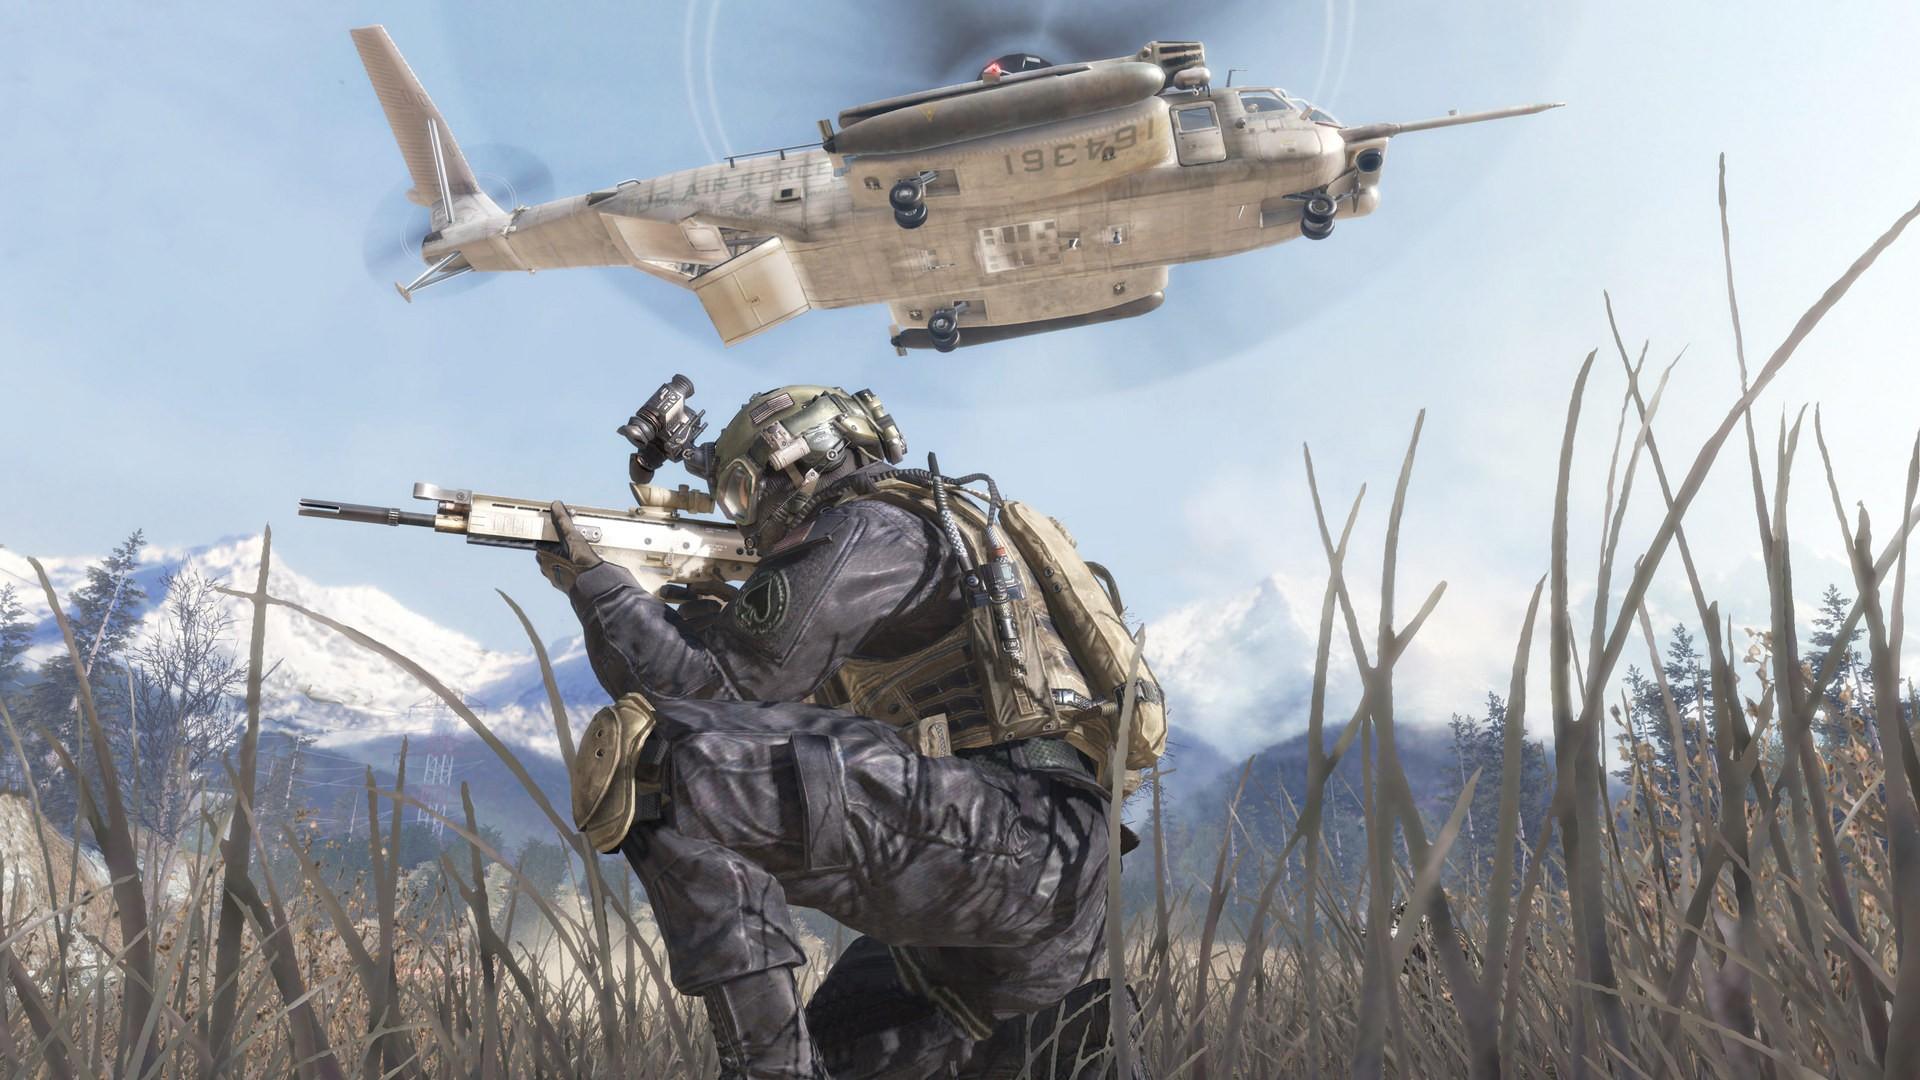 Photo Call of Duty Call of Duty Modern Warfare Games Aviation